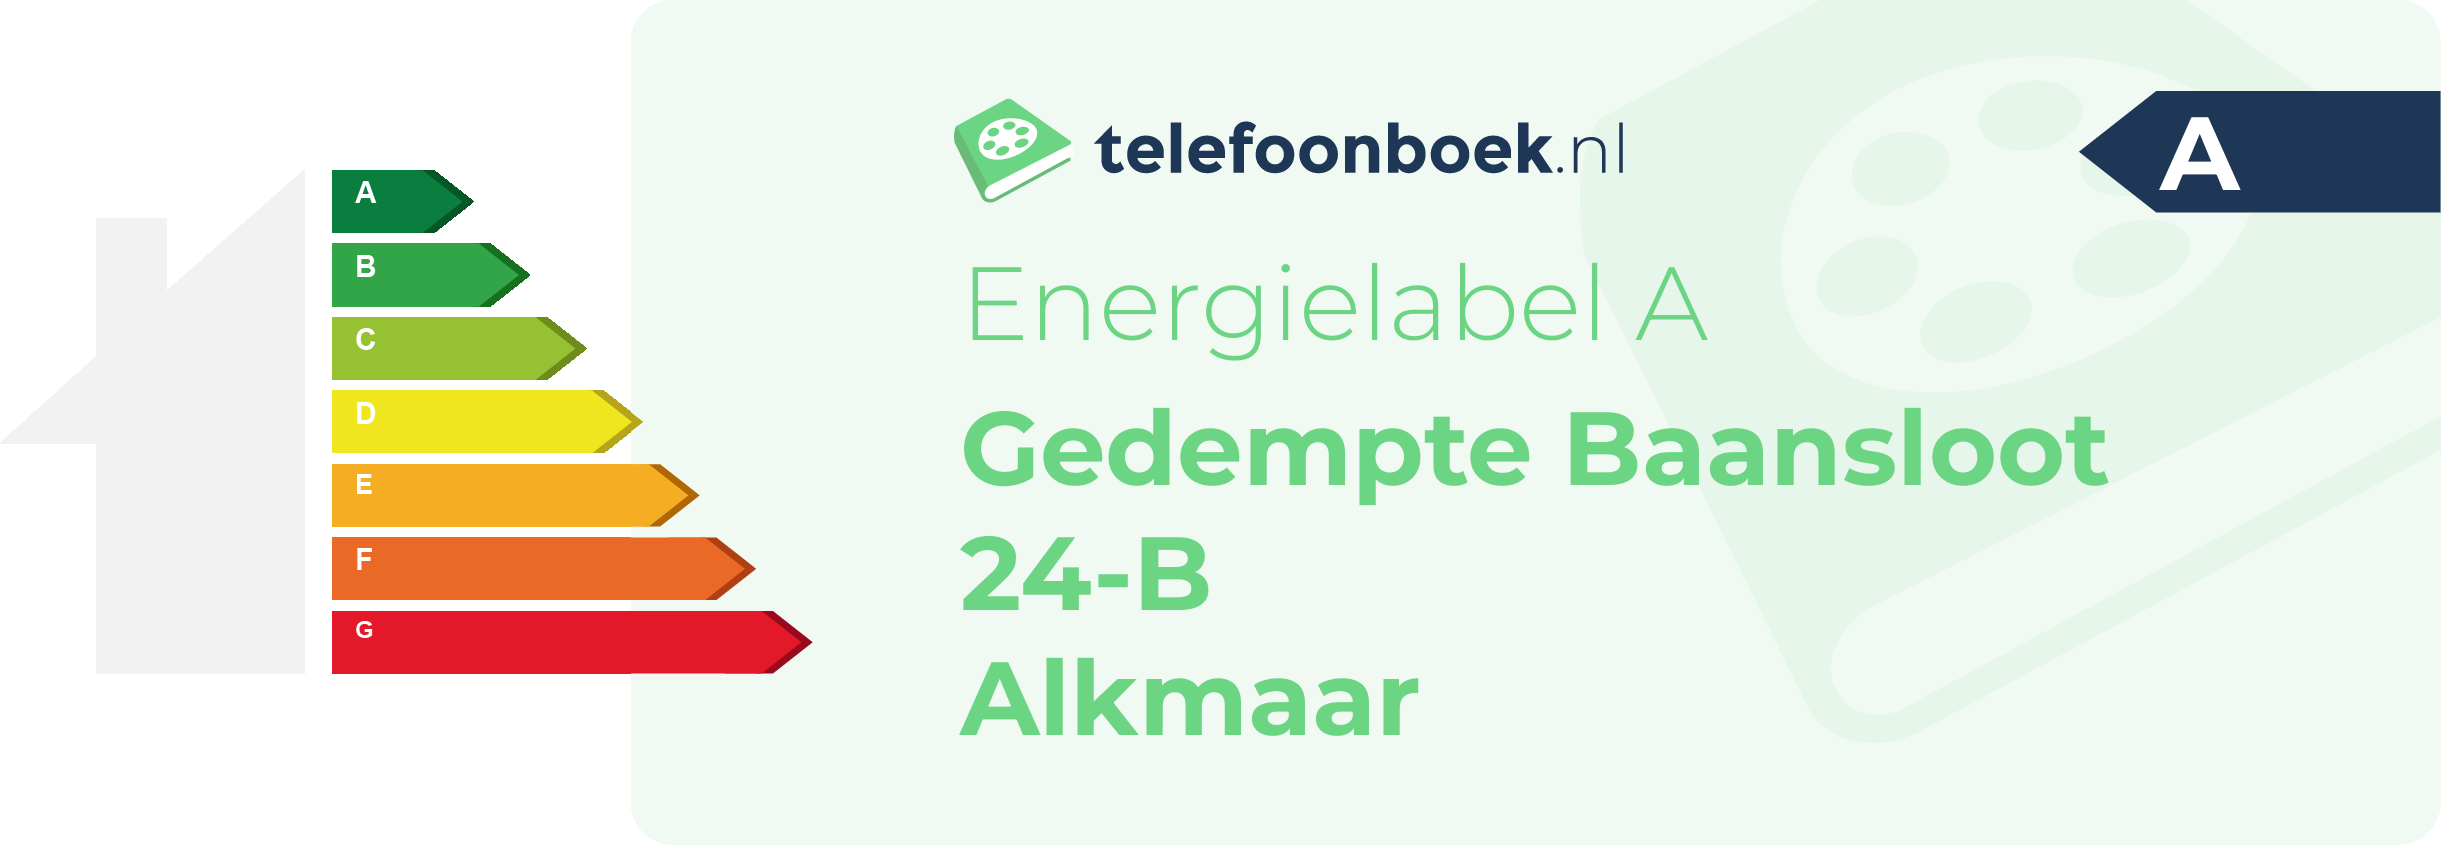 Energielabel Gedempte Baansloot 24-B Alkmaar